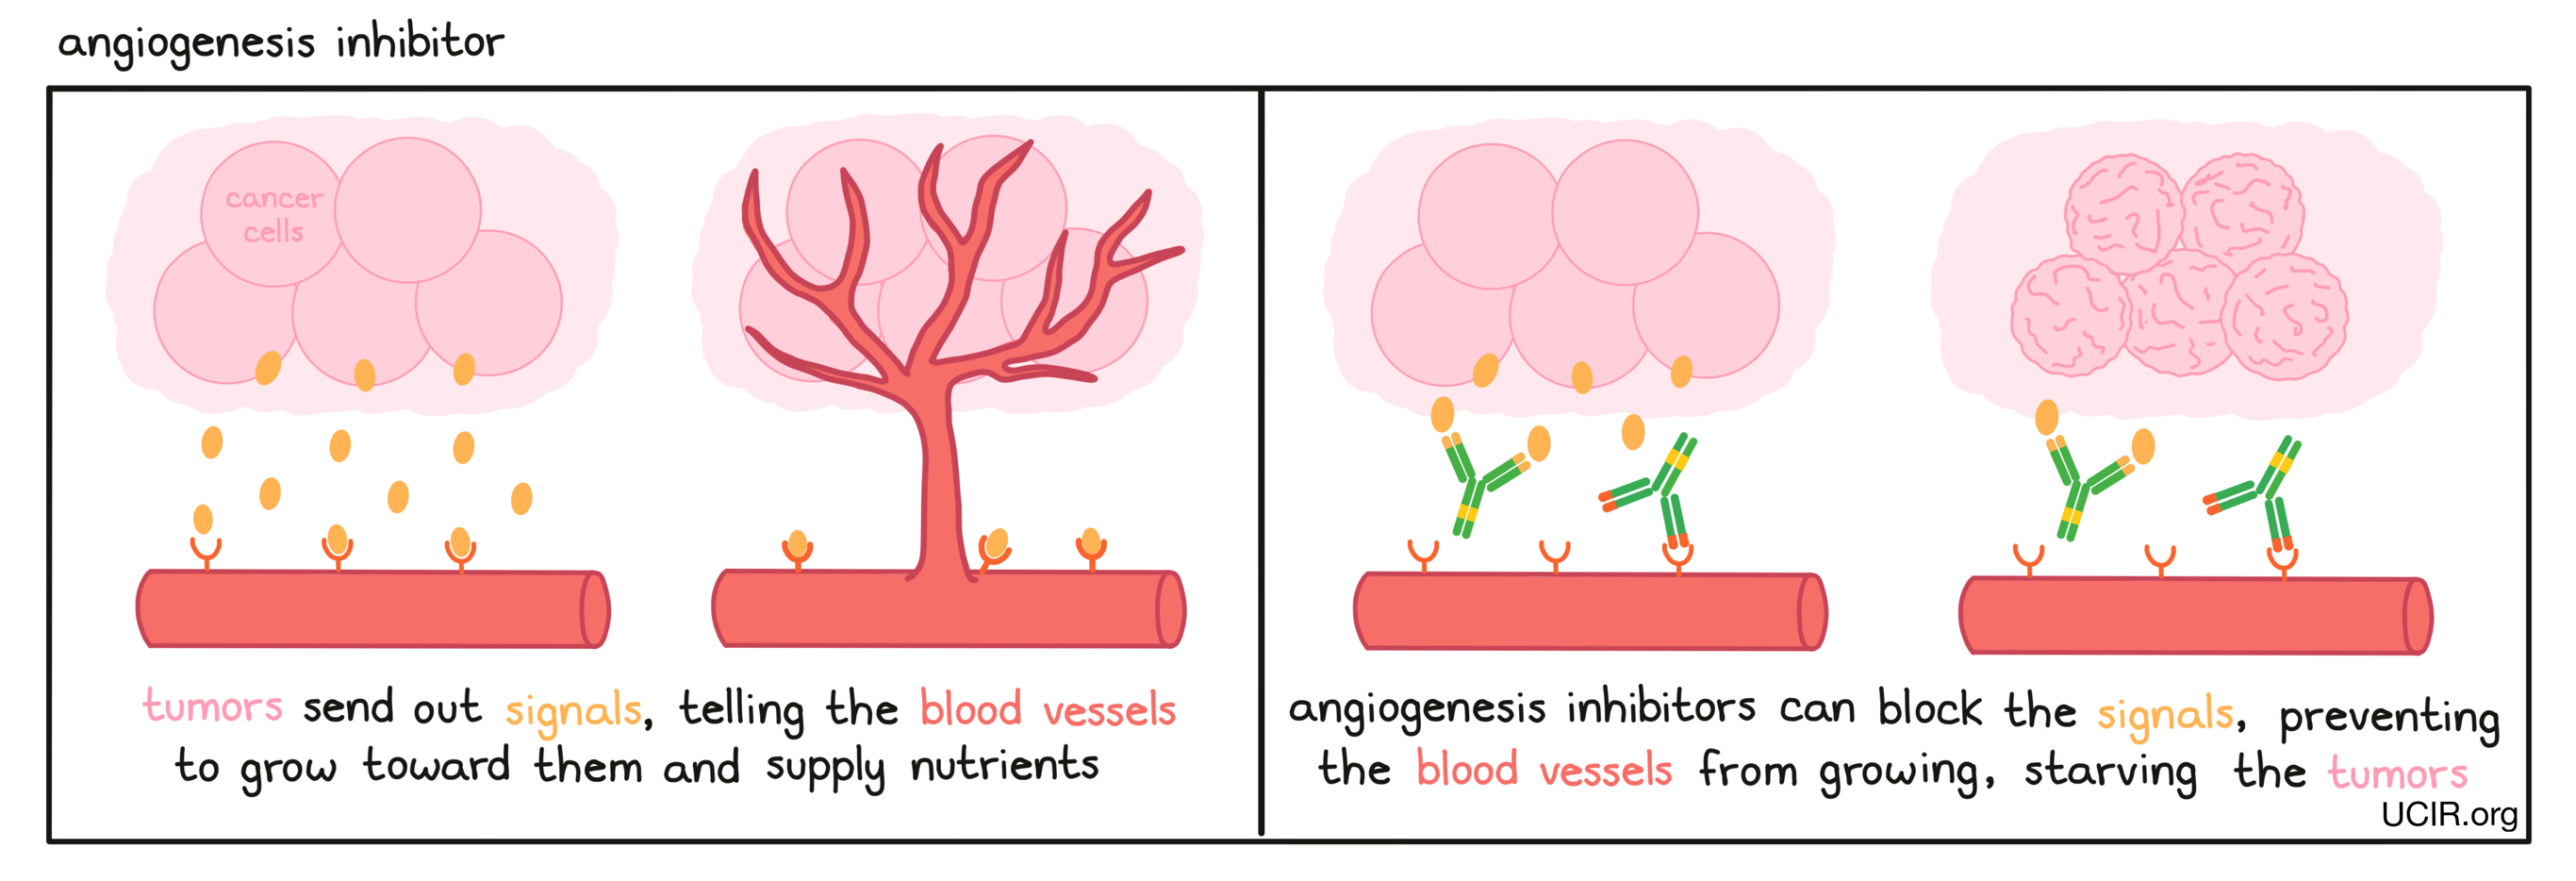 Angiogenesis inhibitor illustration